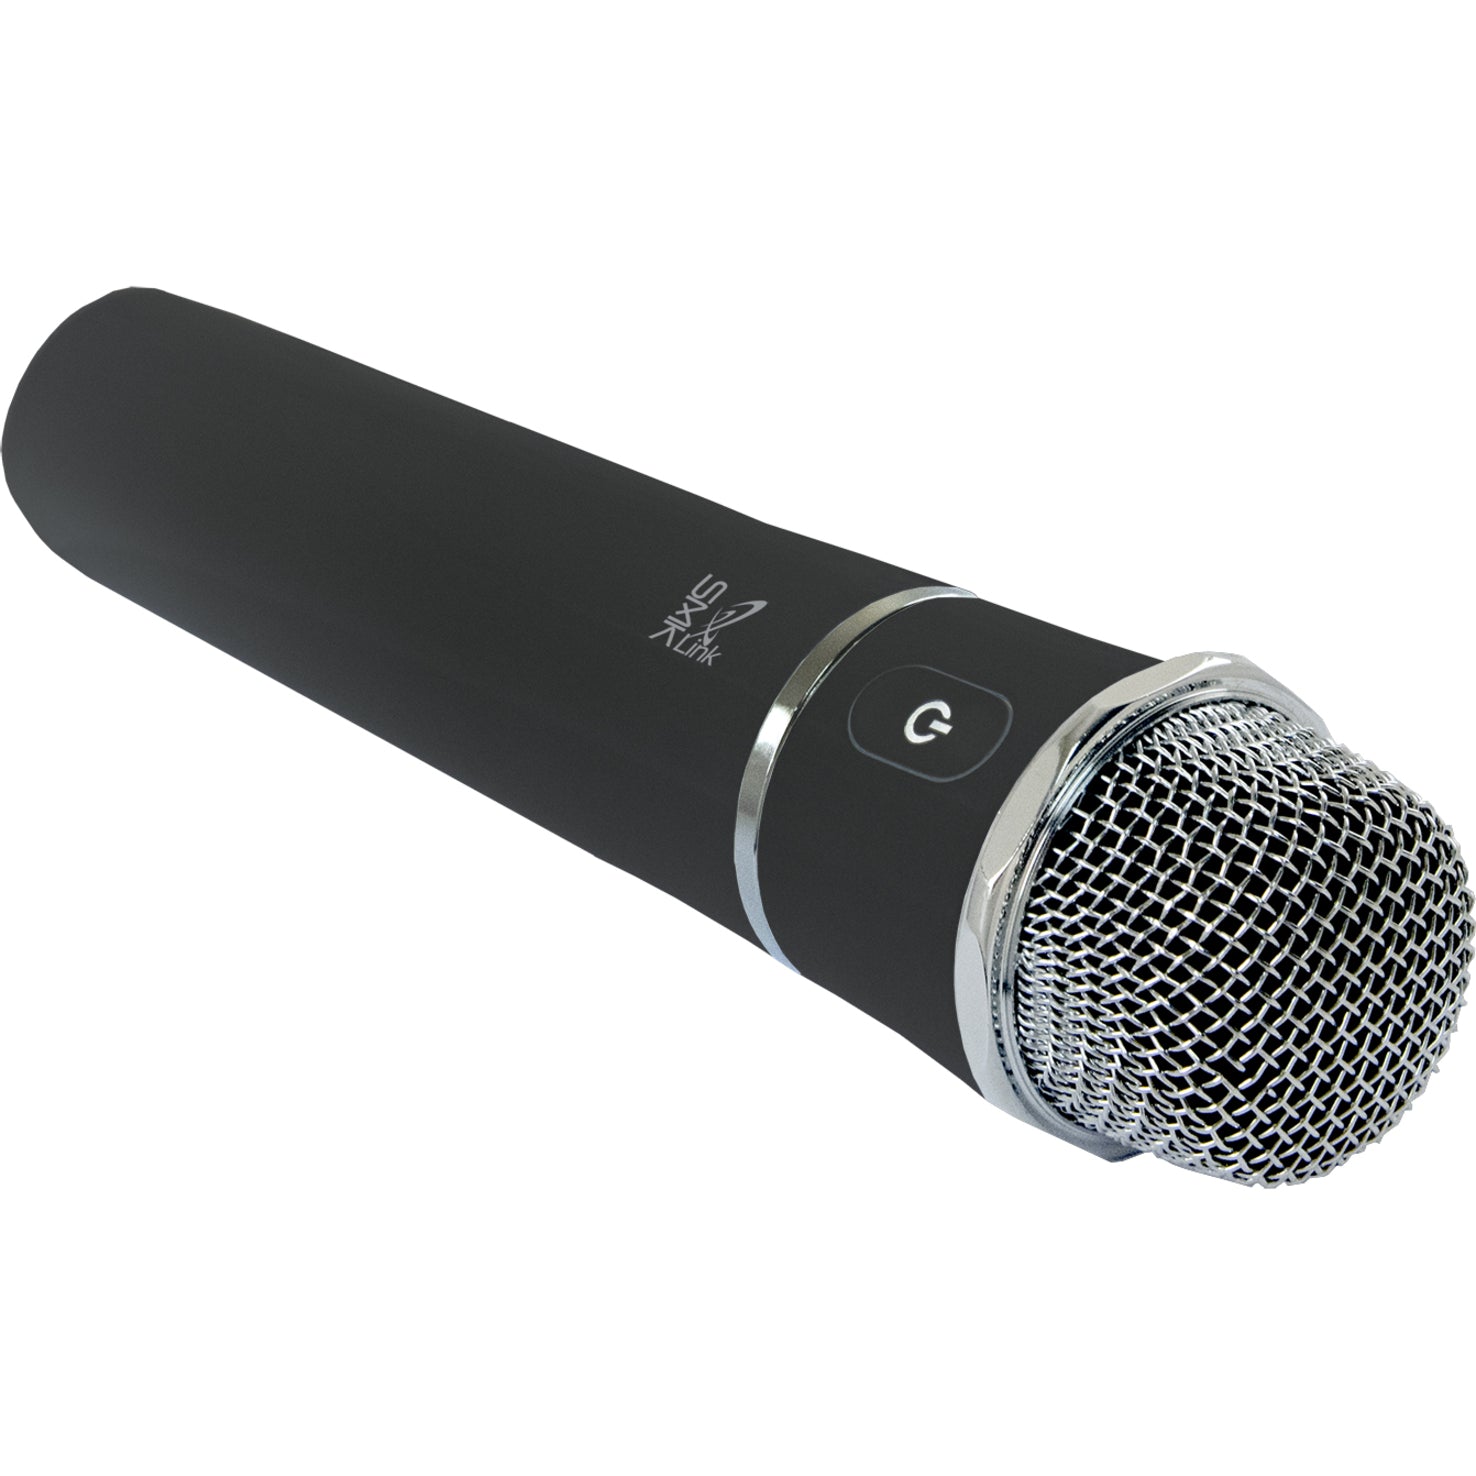 SMK-Link VP3450 GoSpeak! Duet Ultra Portable Personal PA System, 50W Bluetooth Wireless Microphone